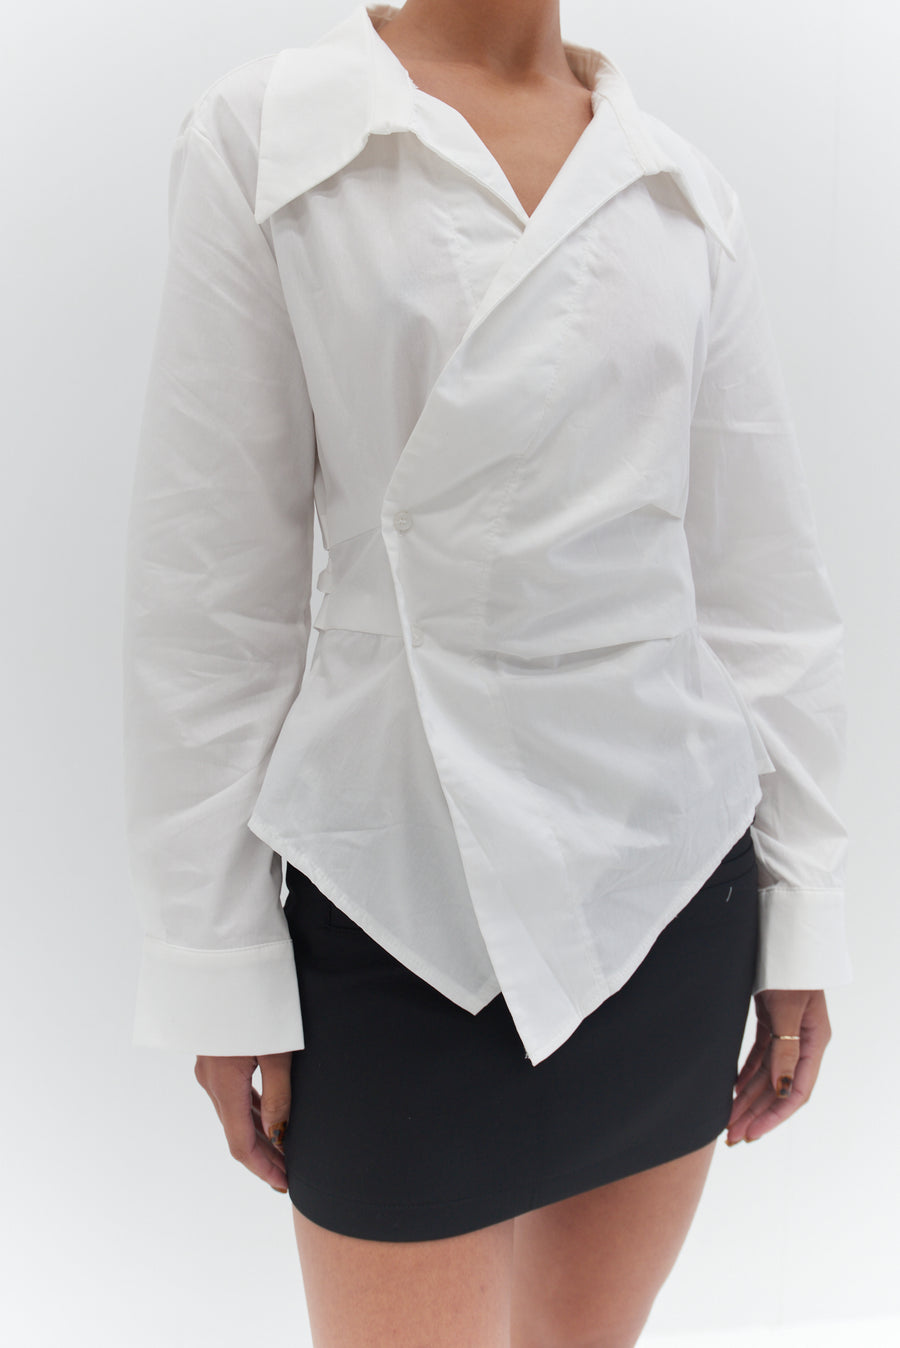 Freya Shirt - White